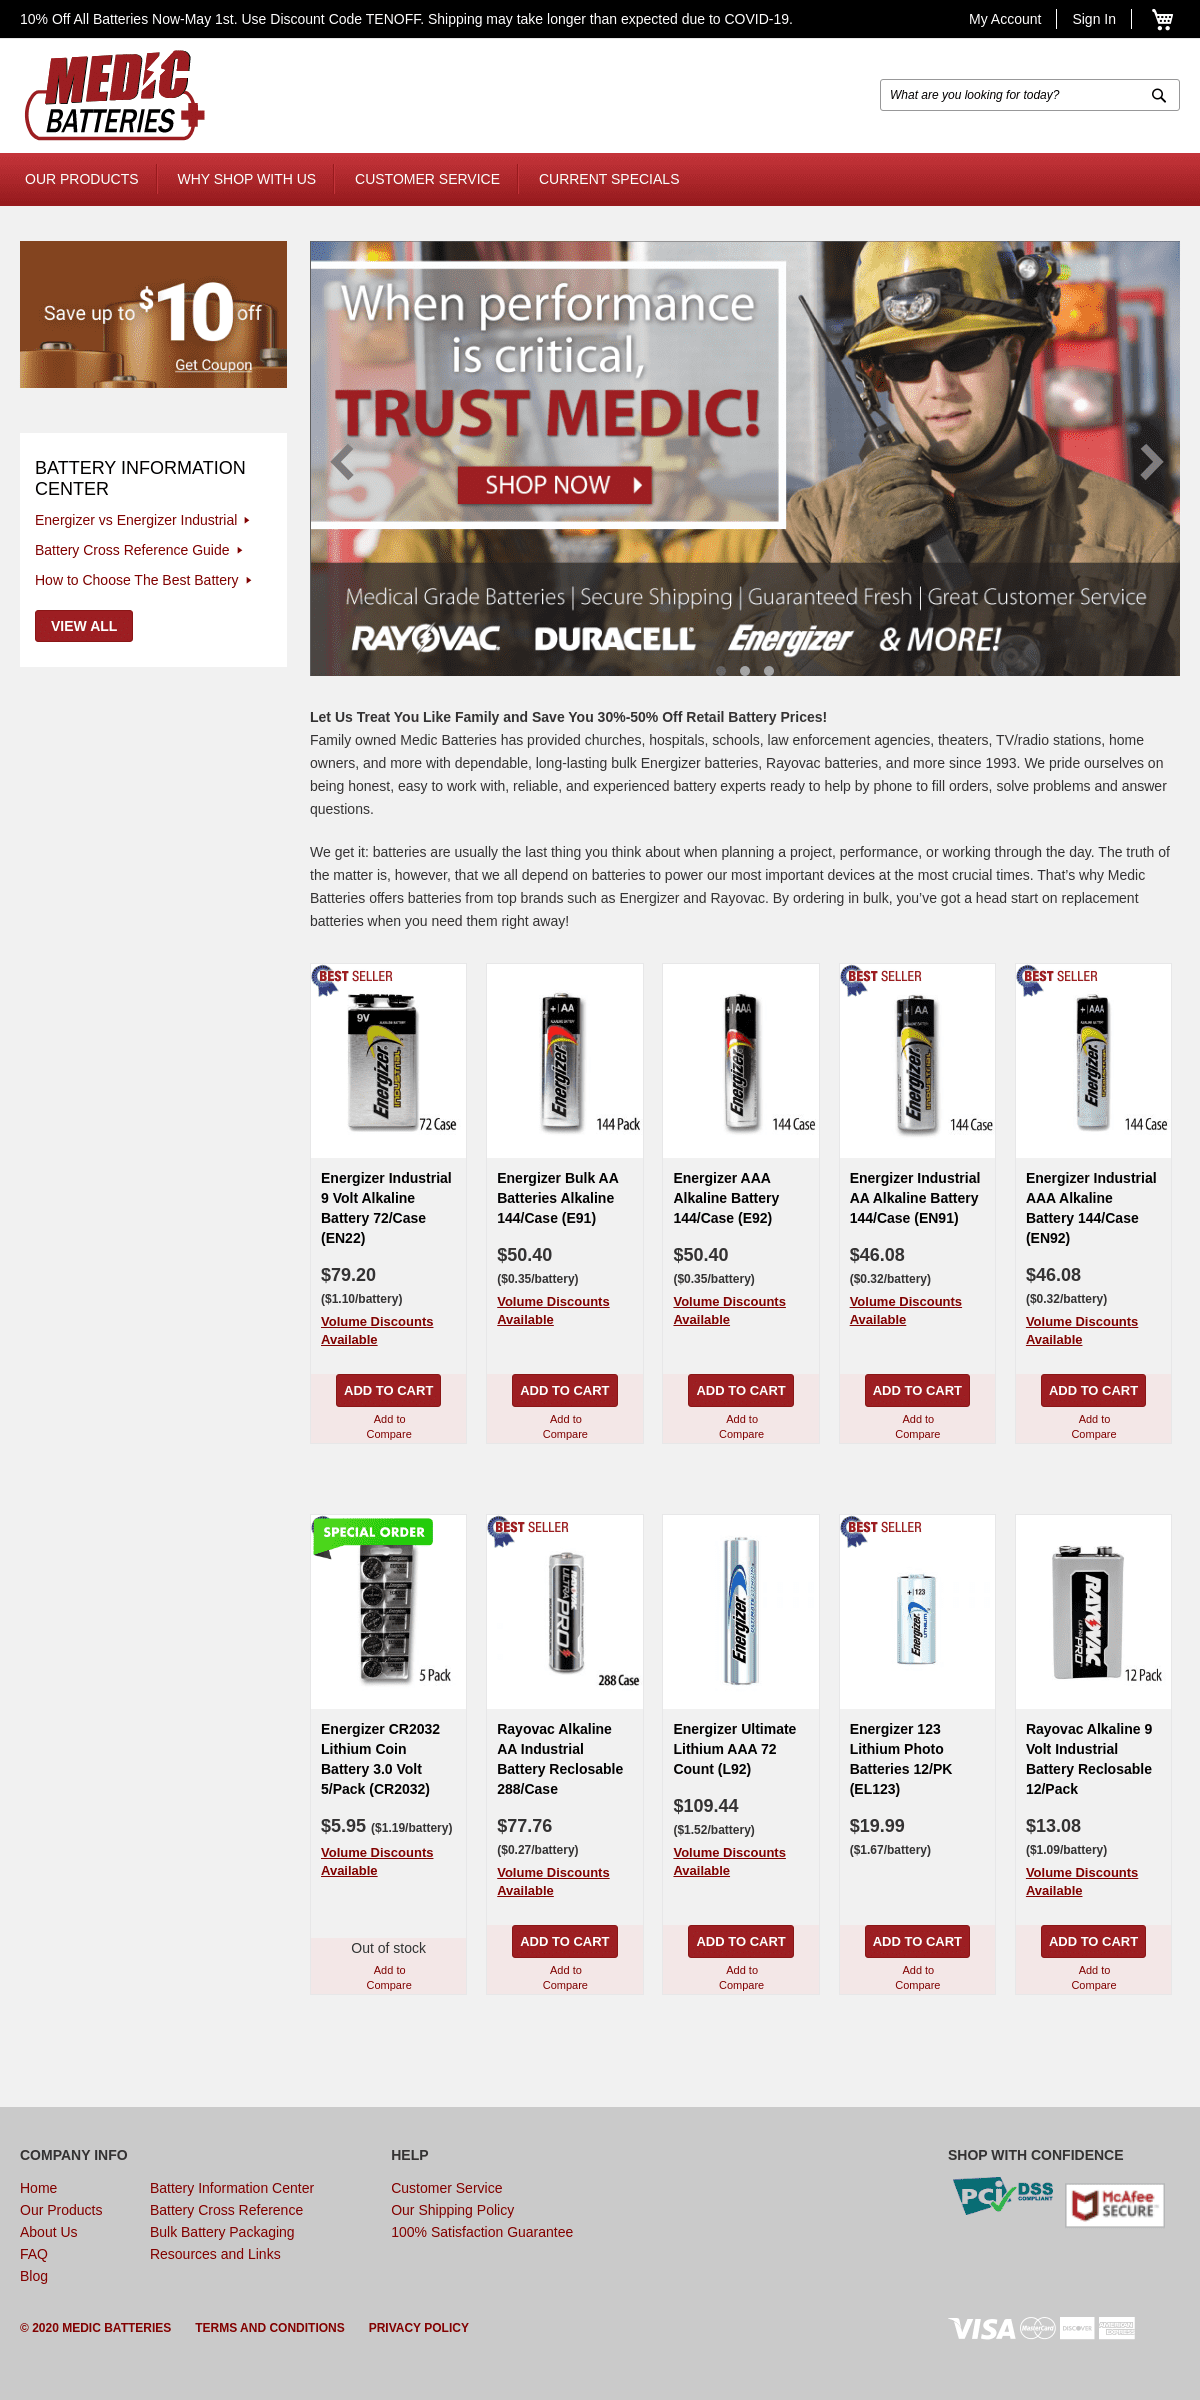 A complete backup of medicbatteries.com